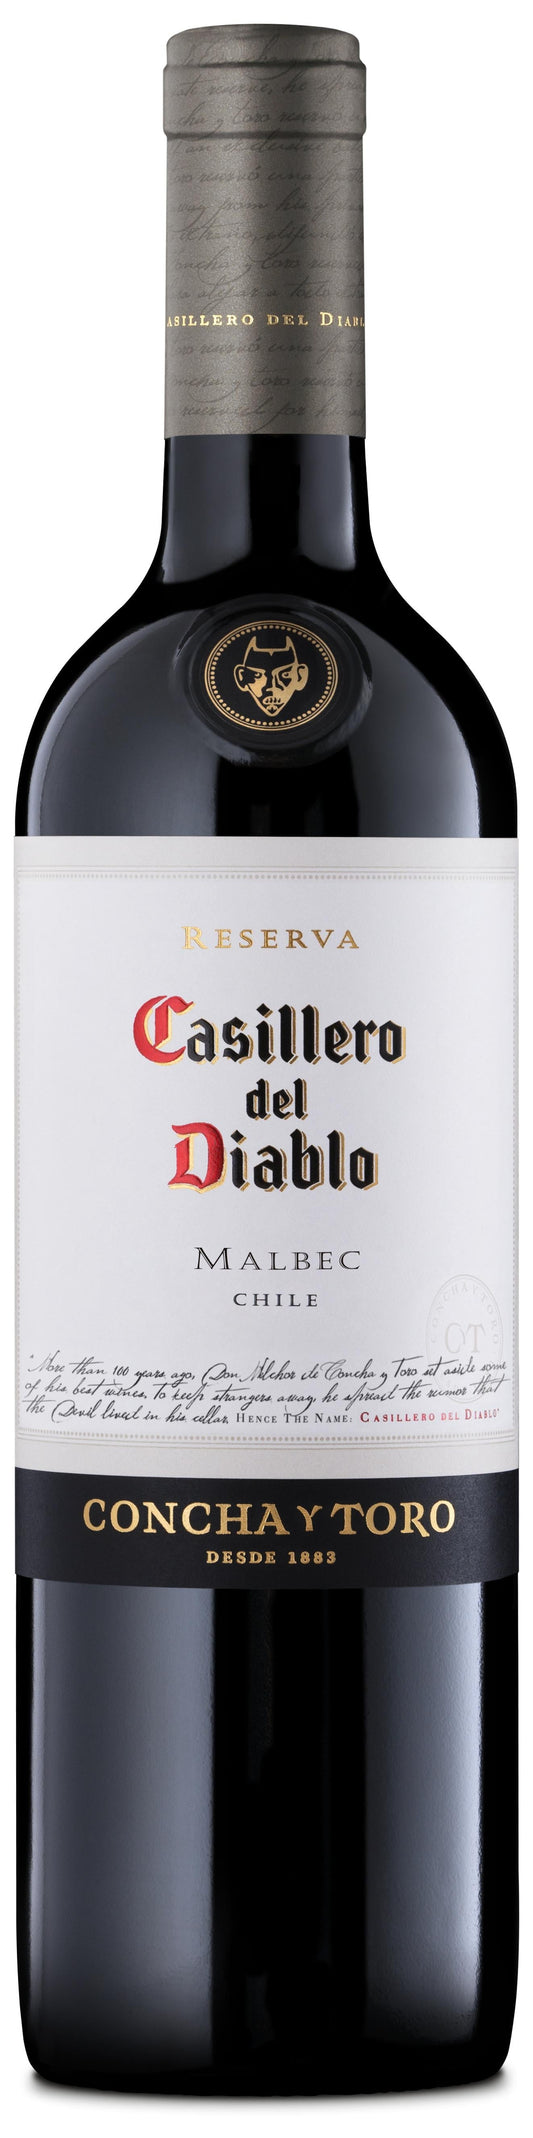 Concha Y Toro Casillero Diablo Malbec Wine, 750 mL